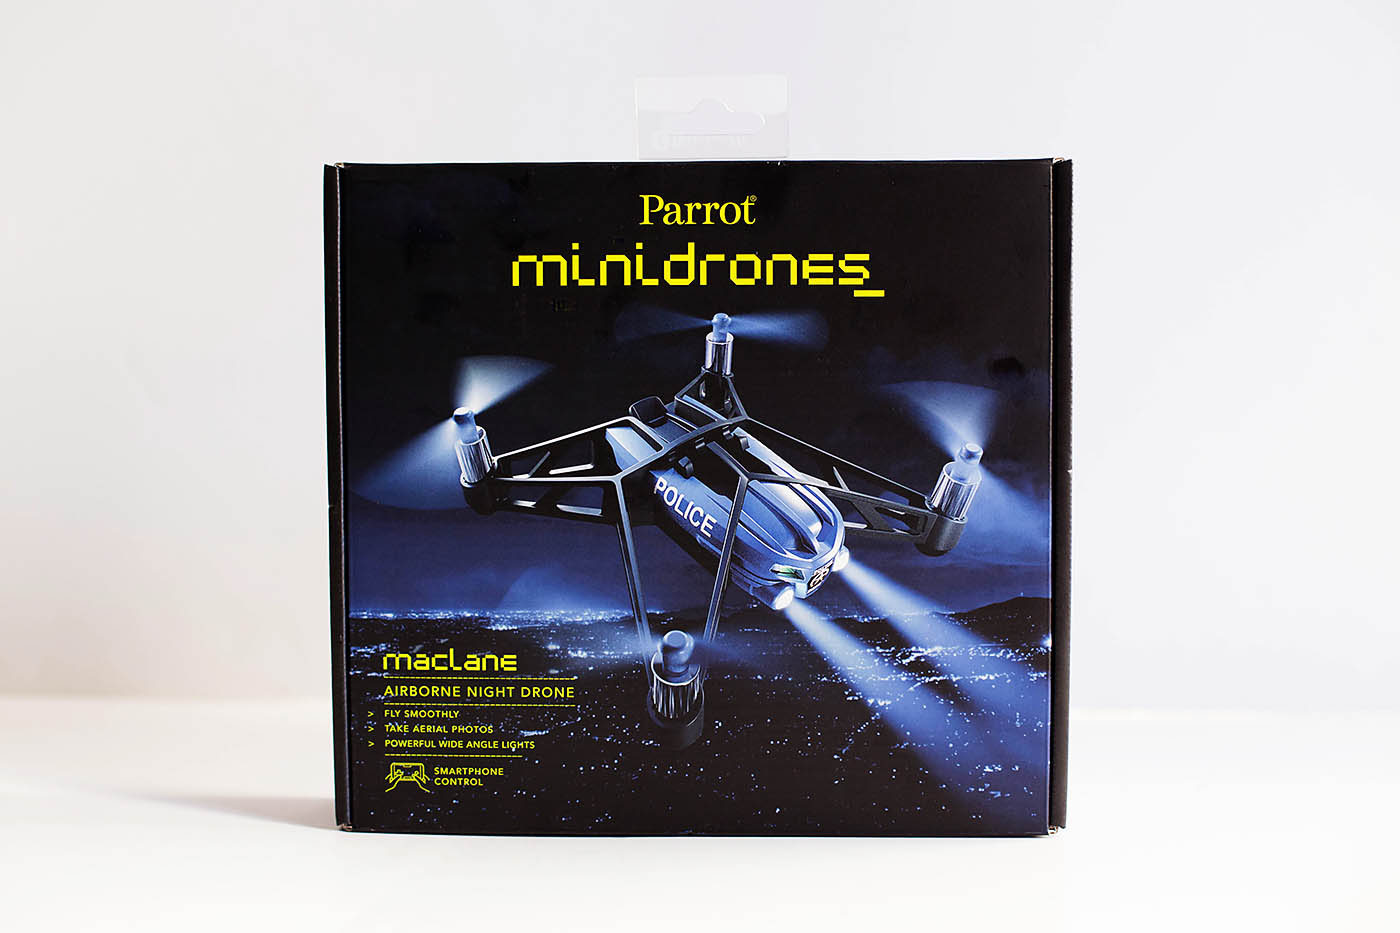 Parrot Minidrones